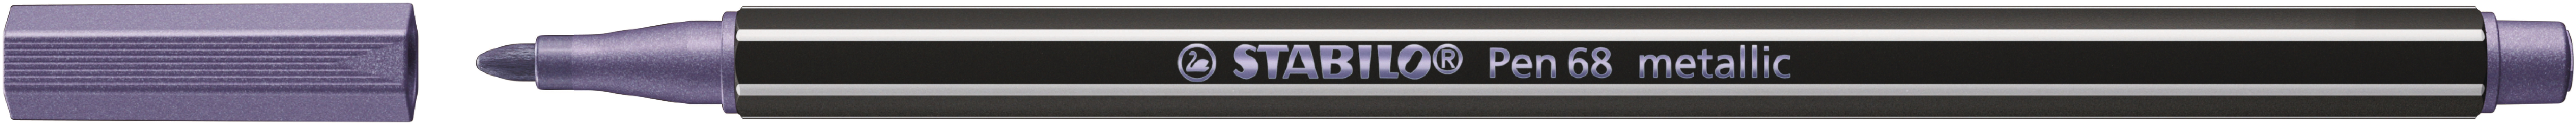 STABILO Stylo Fibre 68 68/855 metallic lilas metallic lilas